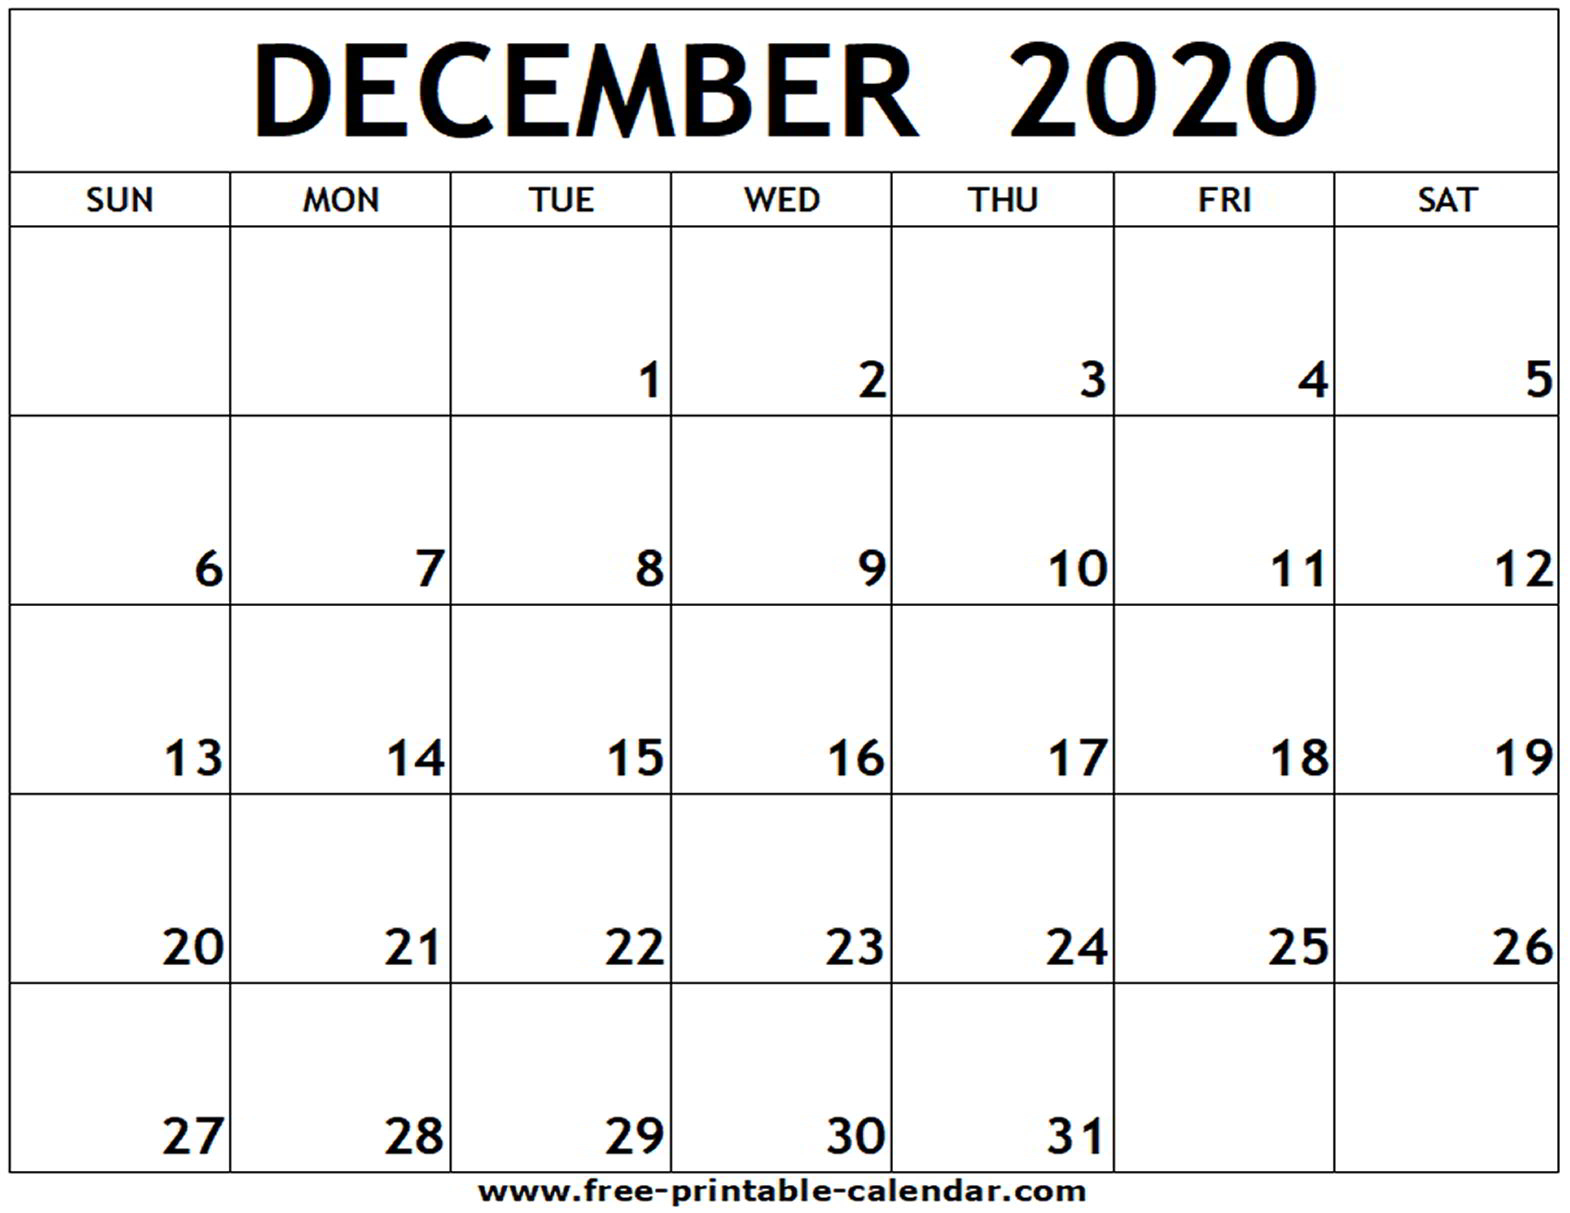 Downloadable Calendar December 2020 - Wpa.wpart.co